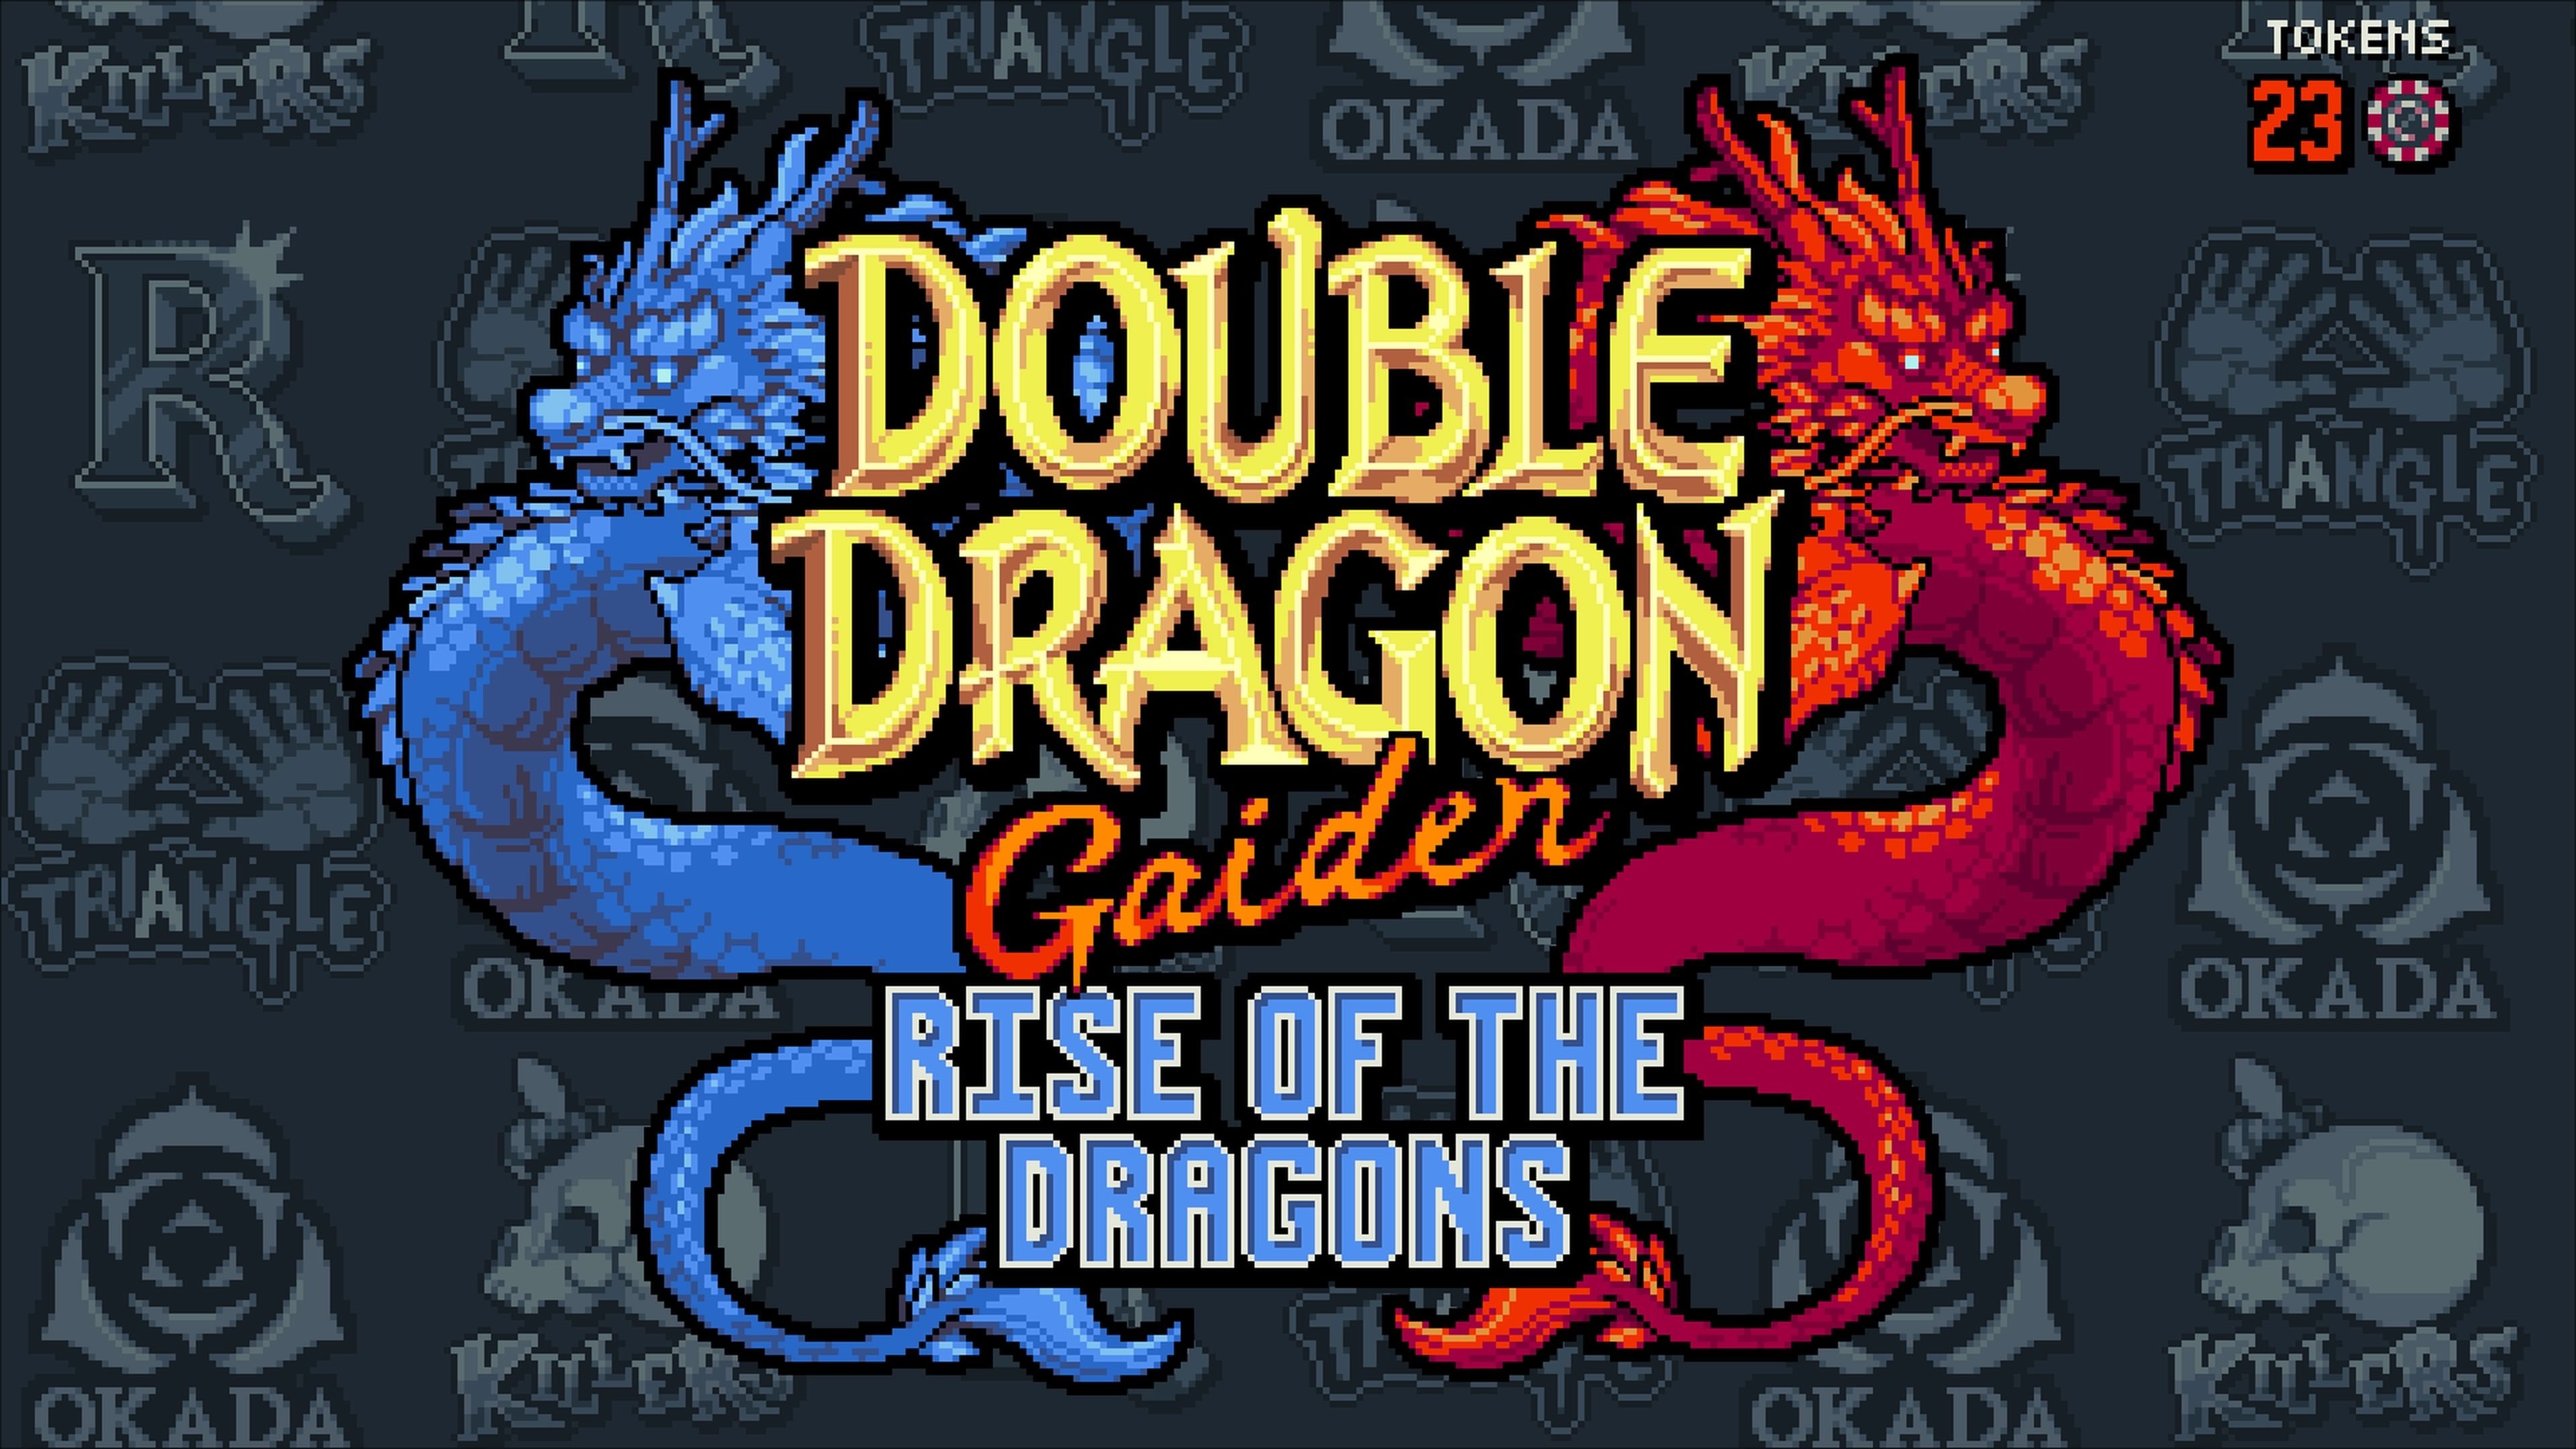 Не в то время и не на тех платформах: Обзор Double Dragon Gaiden: Rise of the Dragons